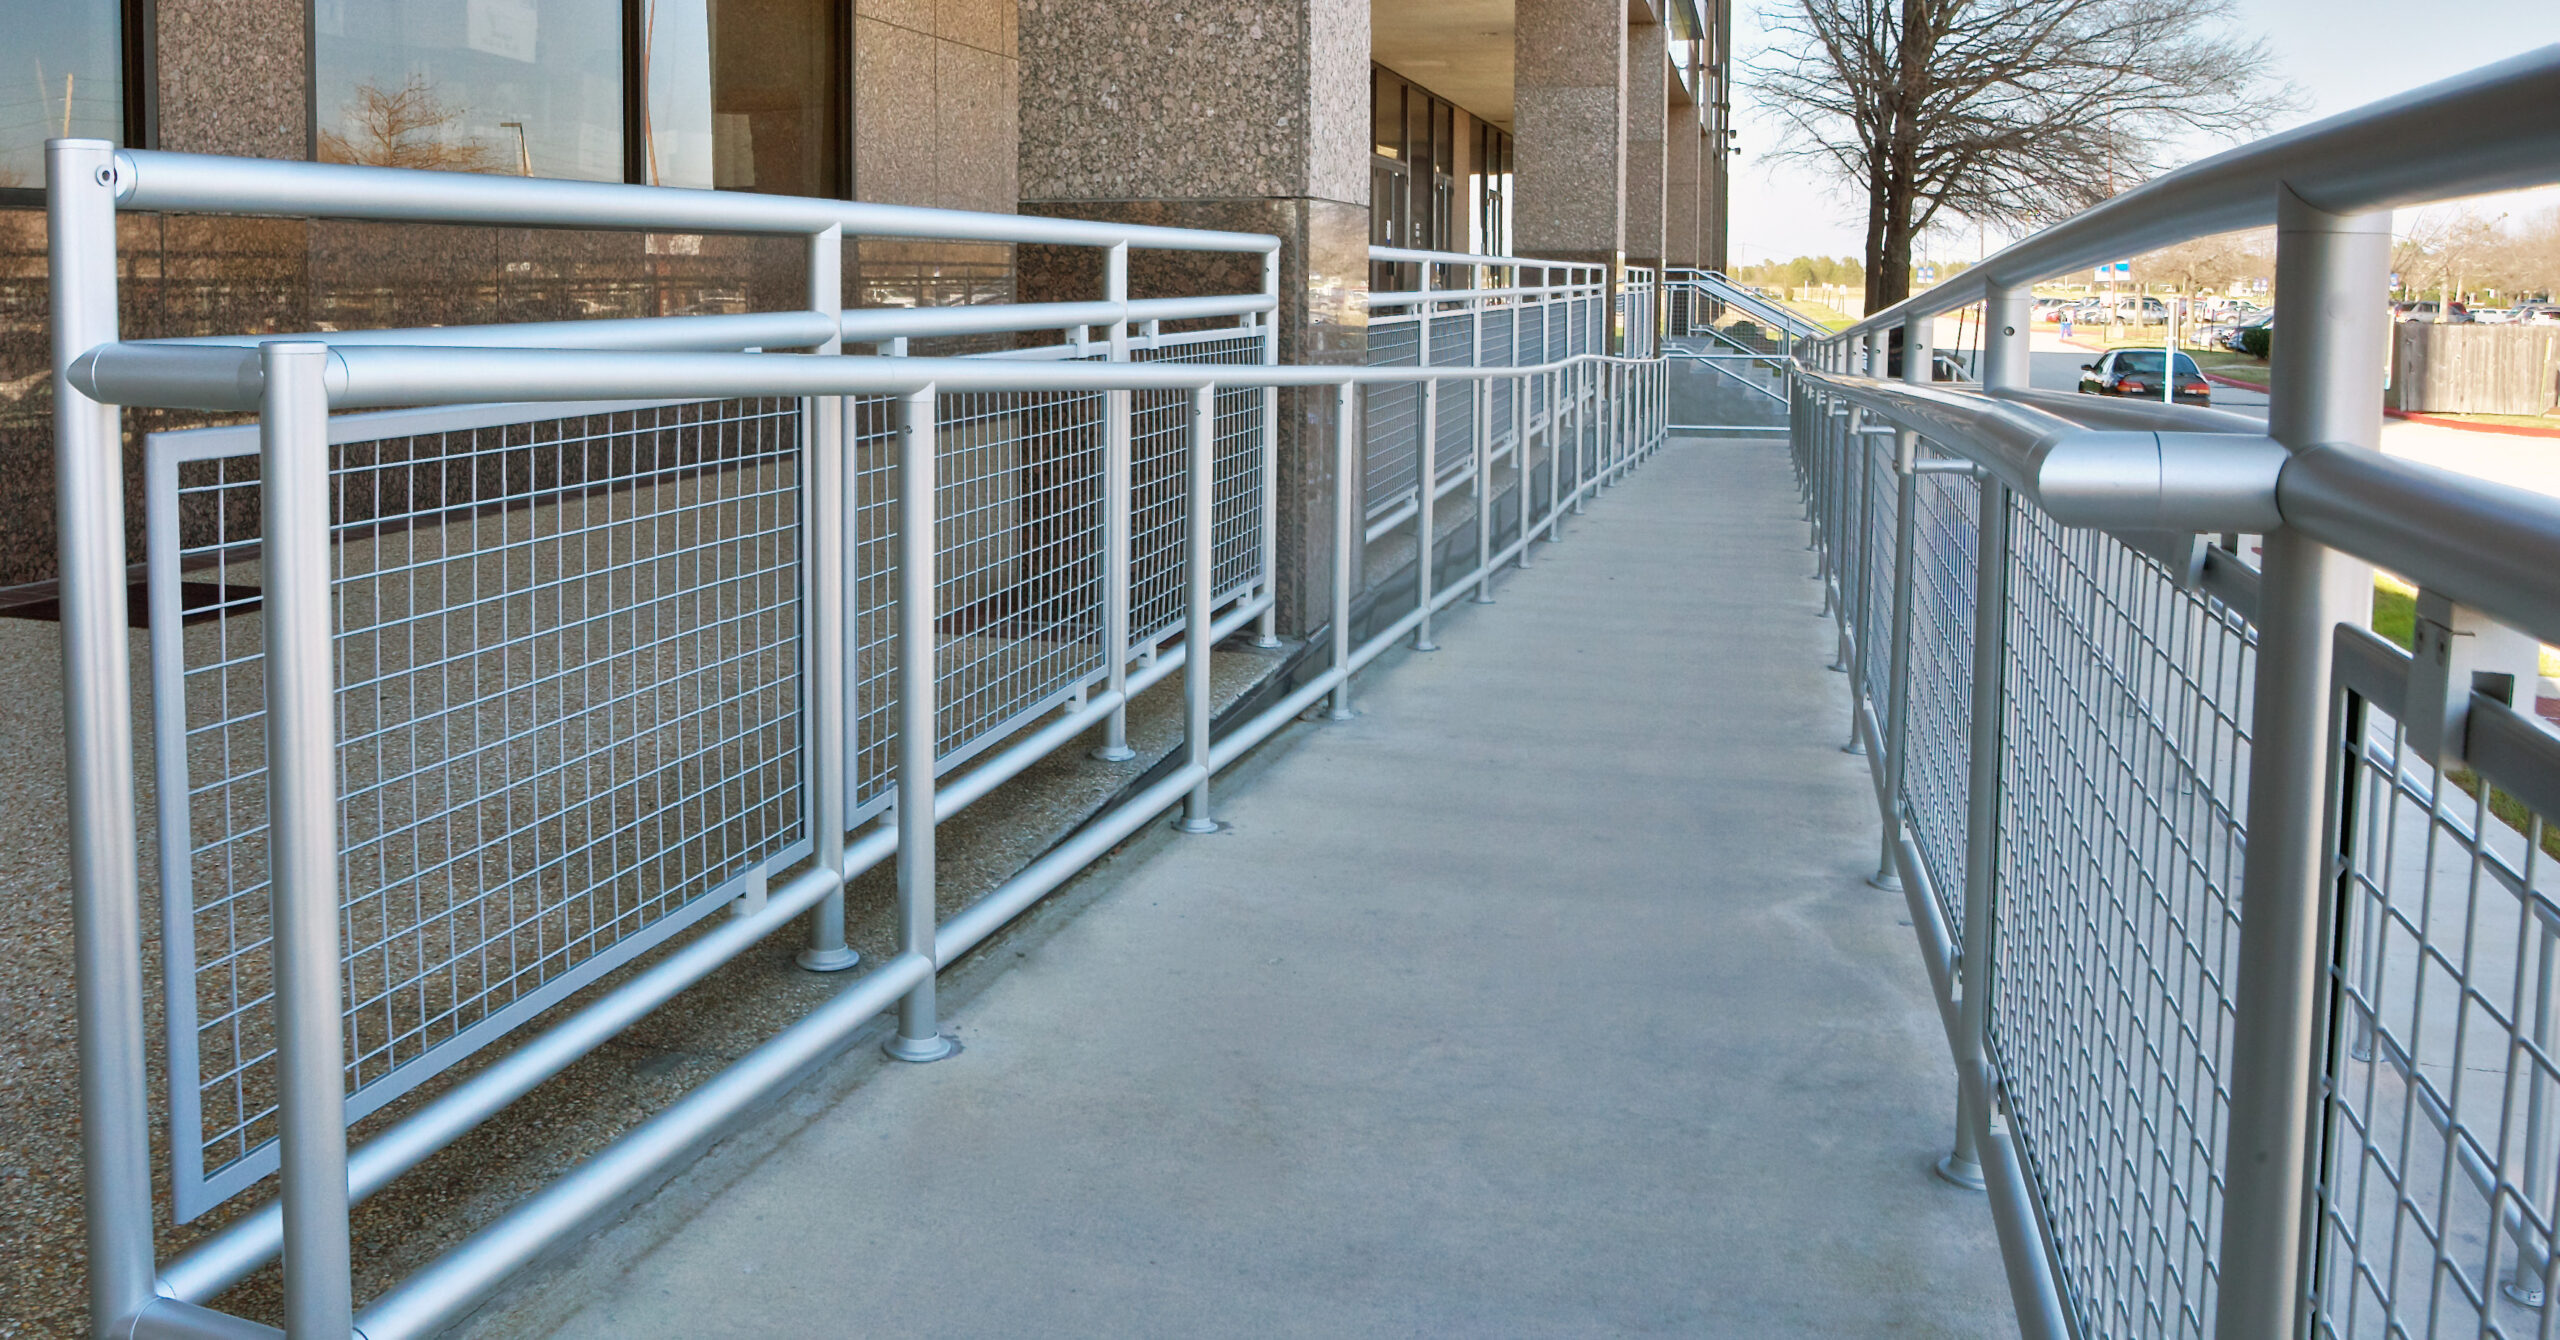 industrial handrail